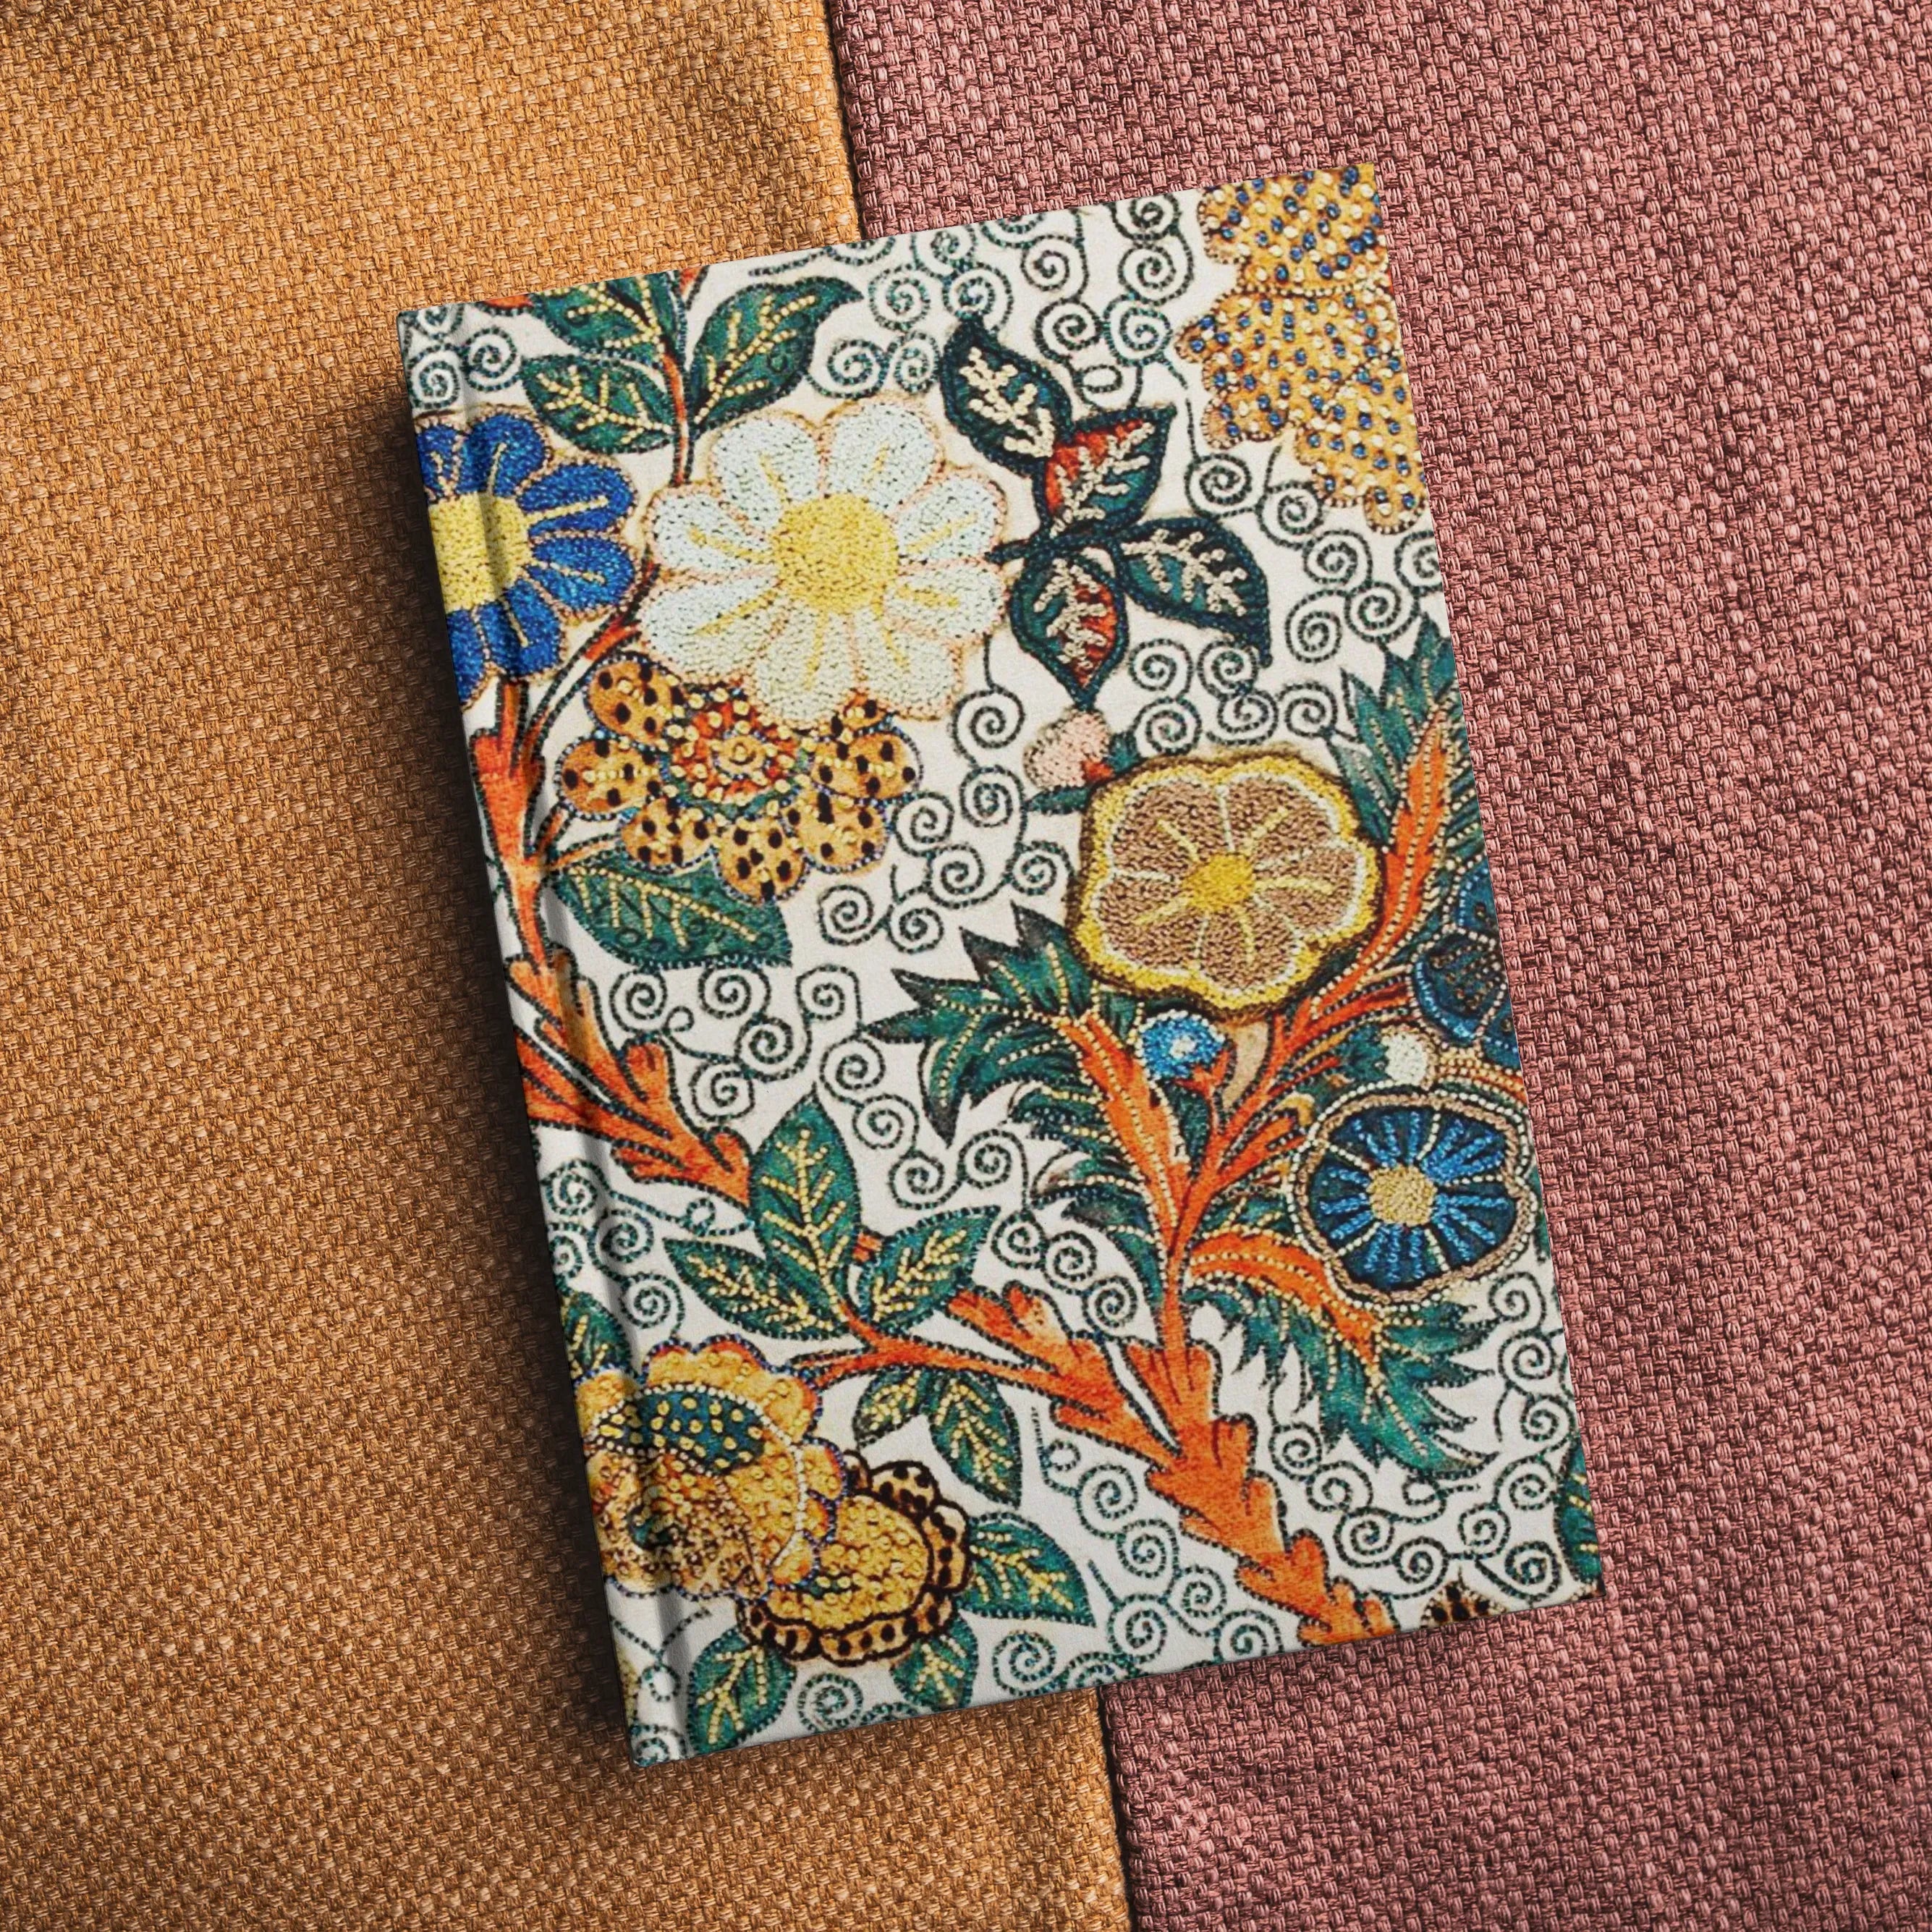 Blossomewhere - Antique Japanese Tapestry Art Journal - Notebooks & Notepads - Aesthetic Art